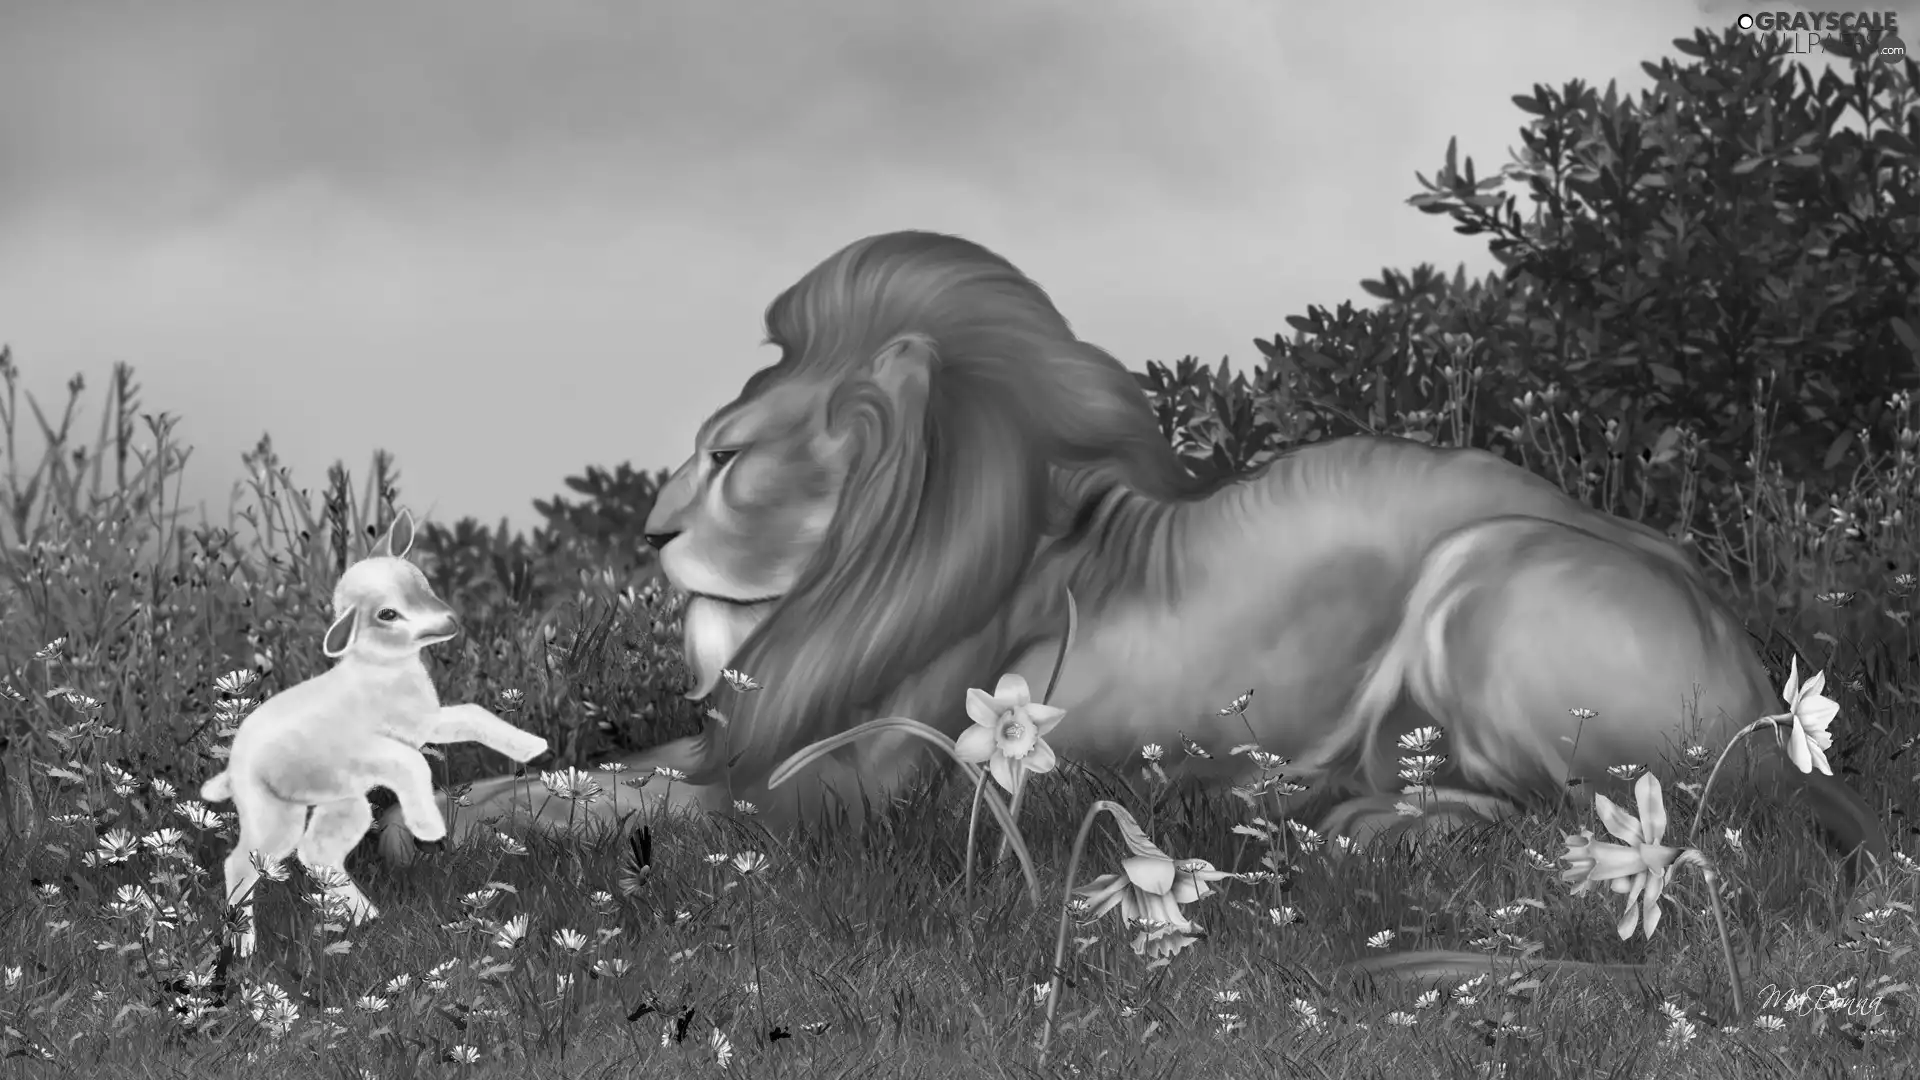 Lion, Meadow, Flowers, sheep